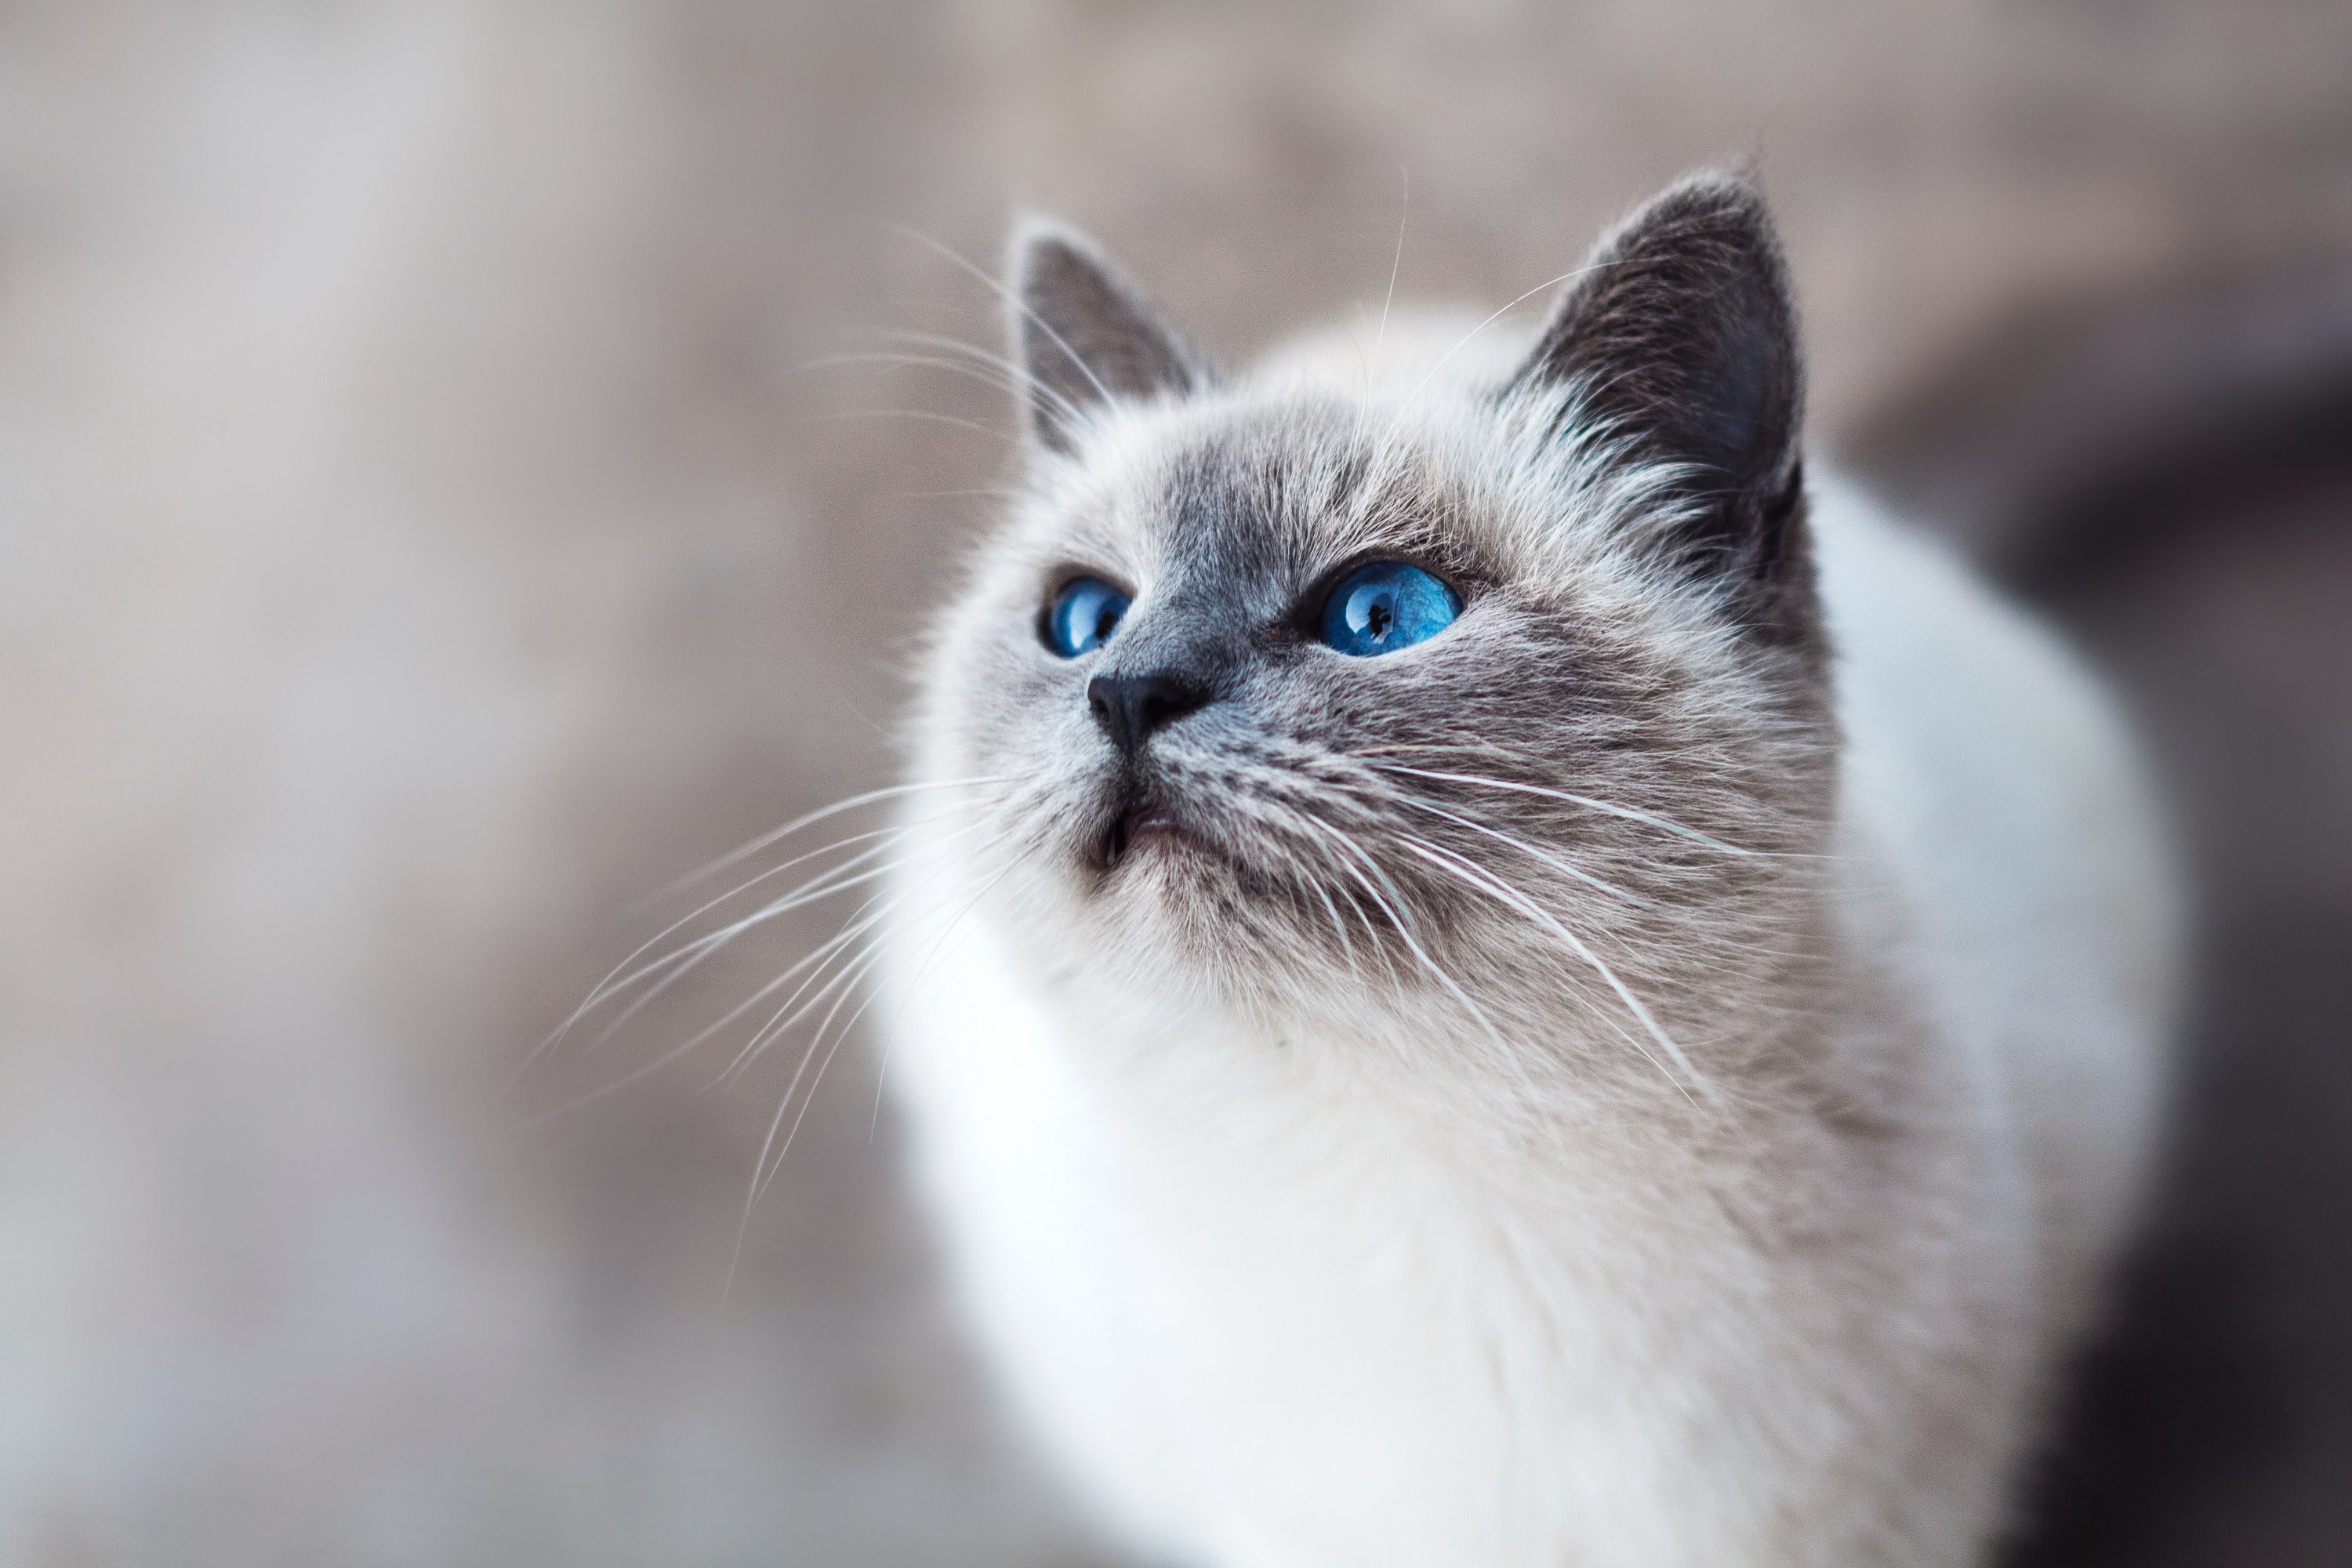 Washingtonian Cutest Cat Contest 2019. All photographs via Unsplash.